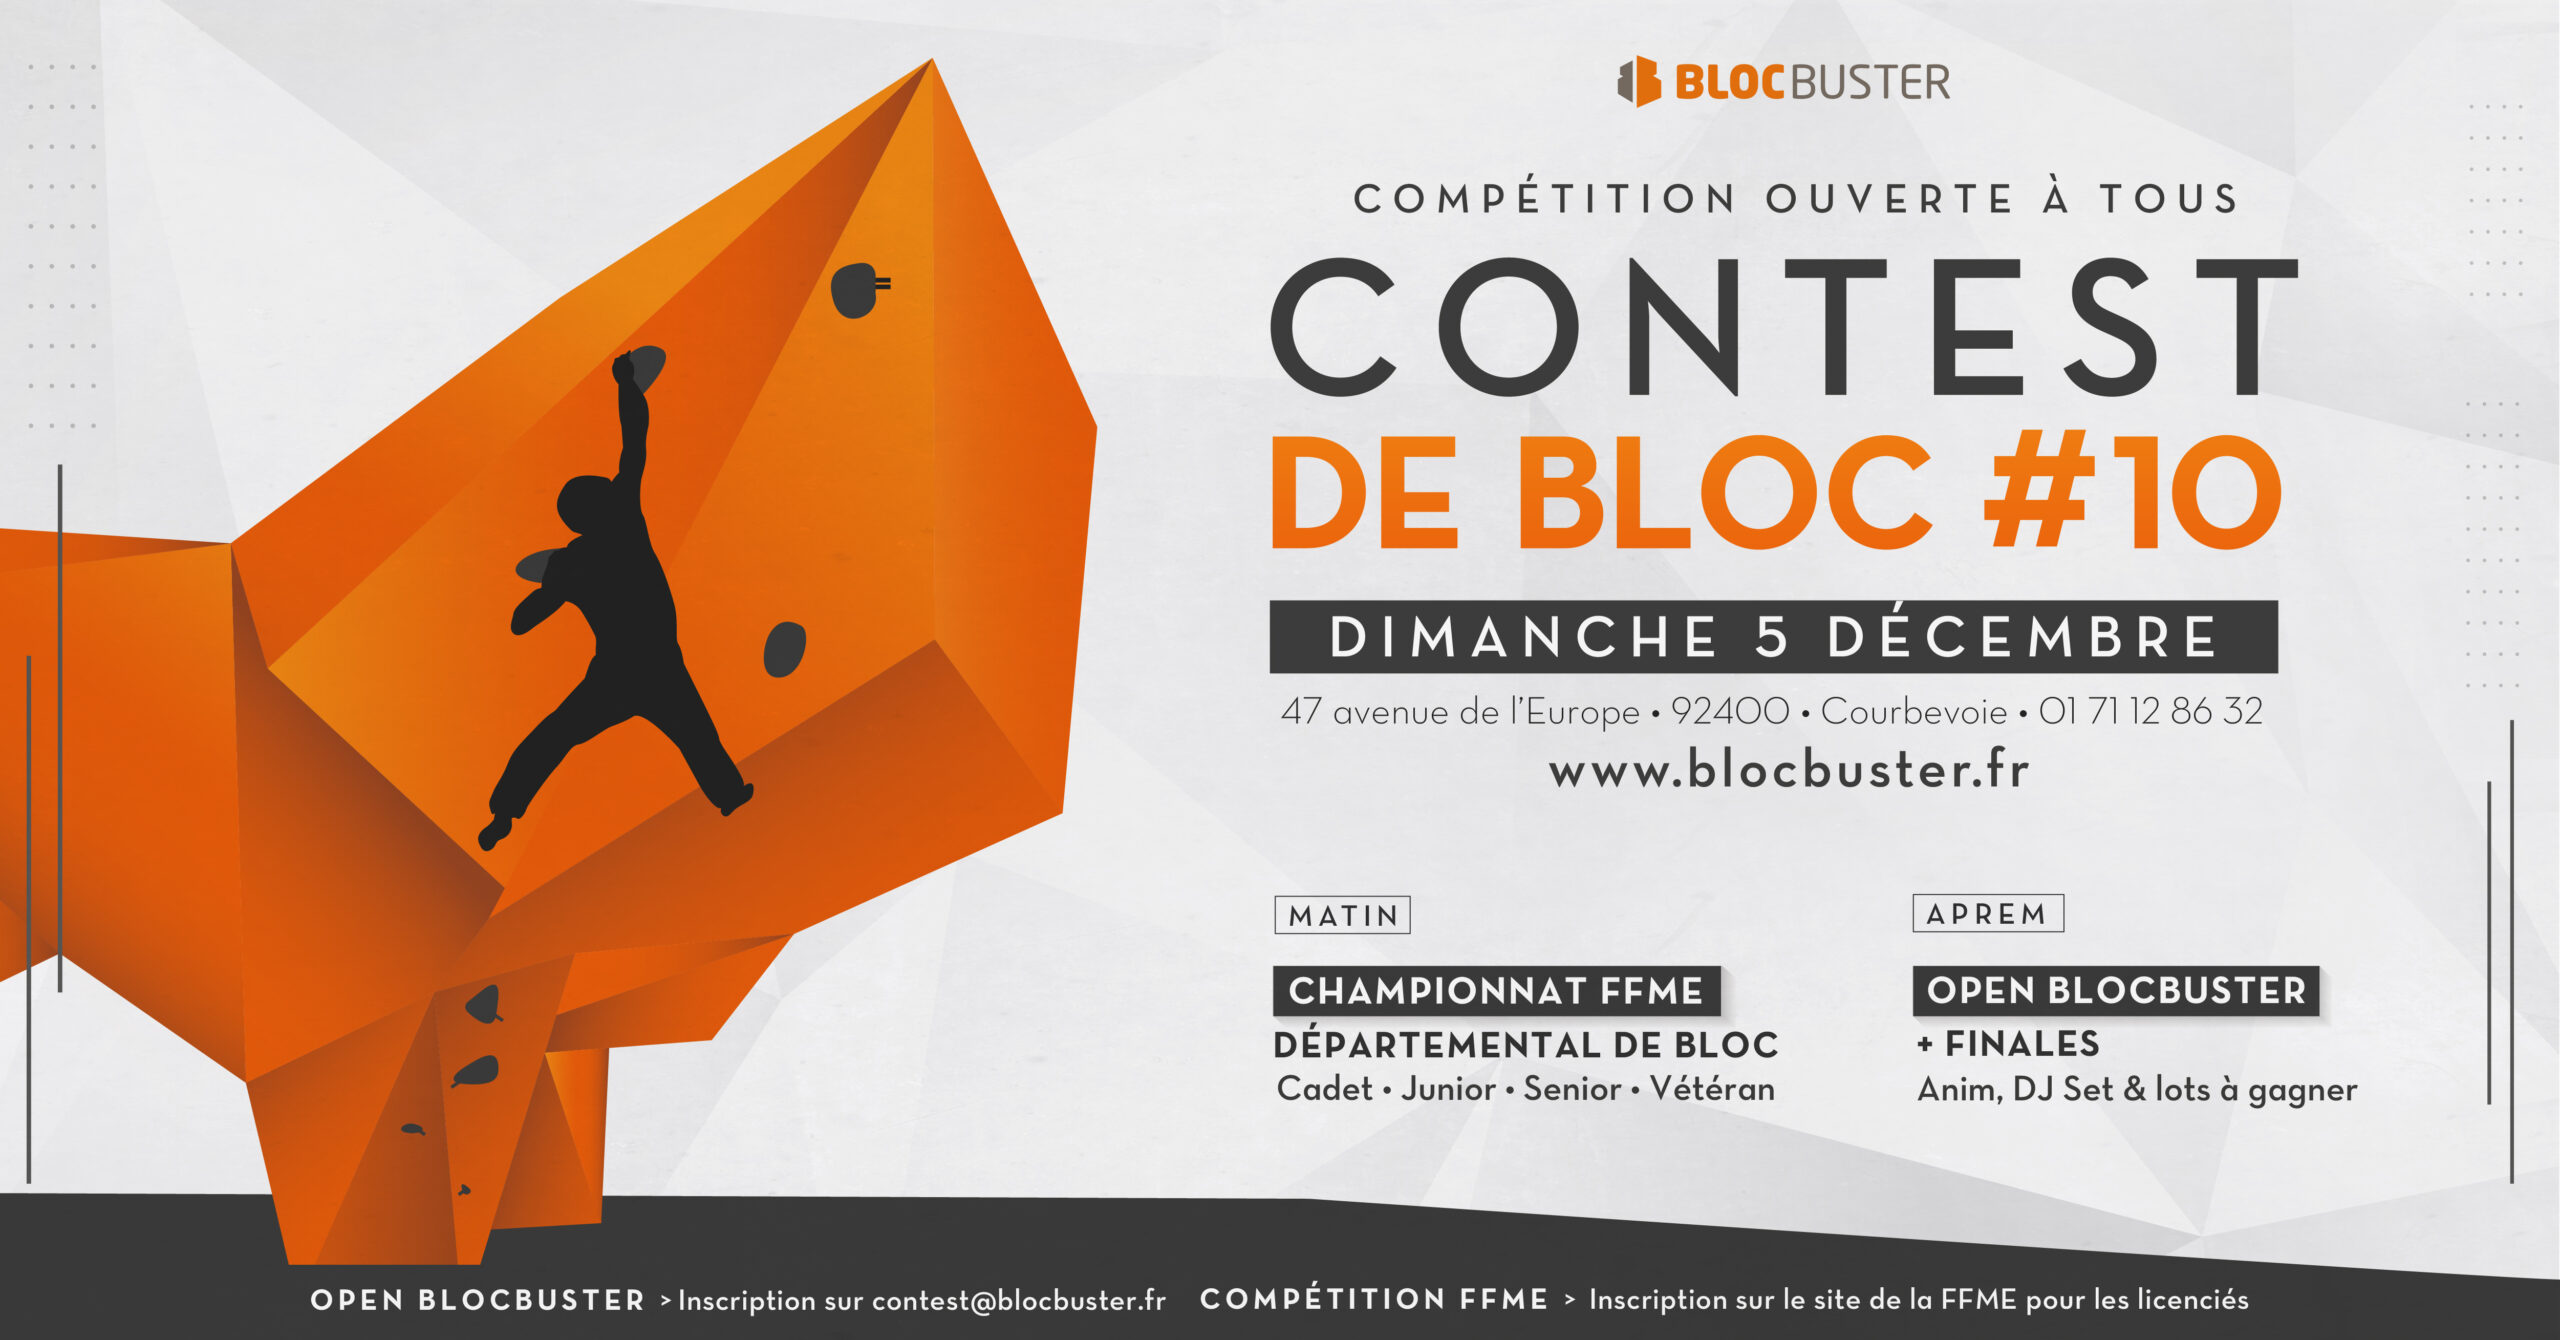 Blocbuster Contest de bloc #10